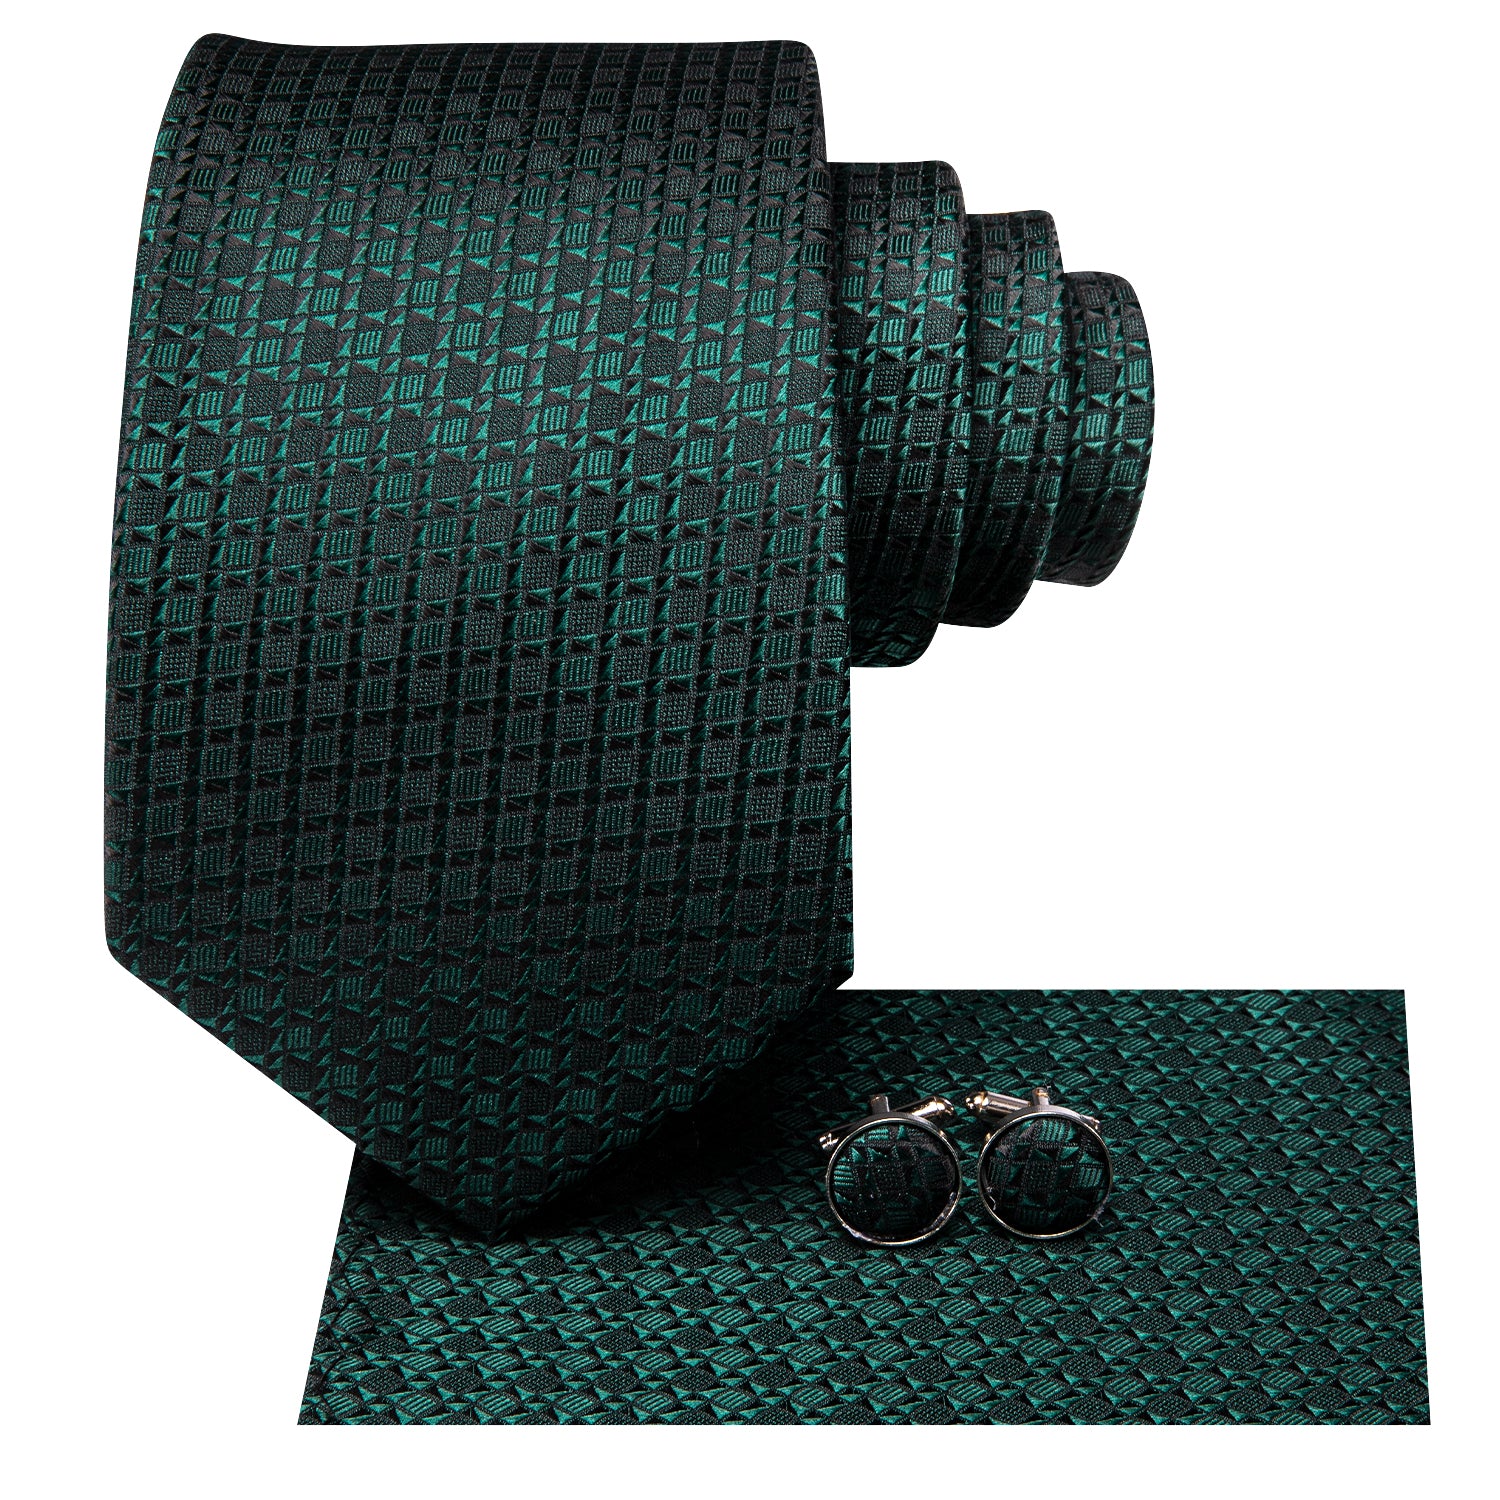 Hi-Tie Emerald Green Novelty Men's Tie Pocket Square Cufflinks Set